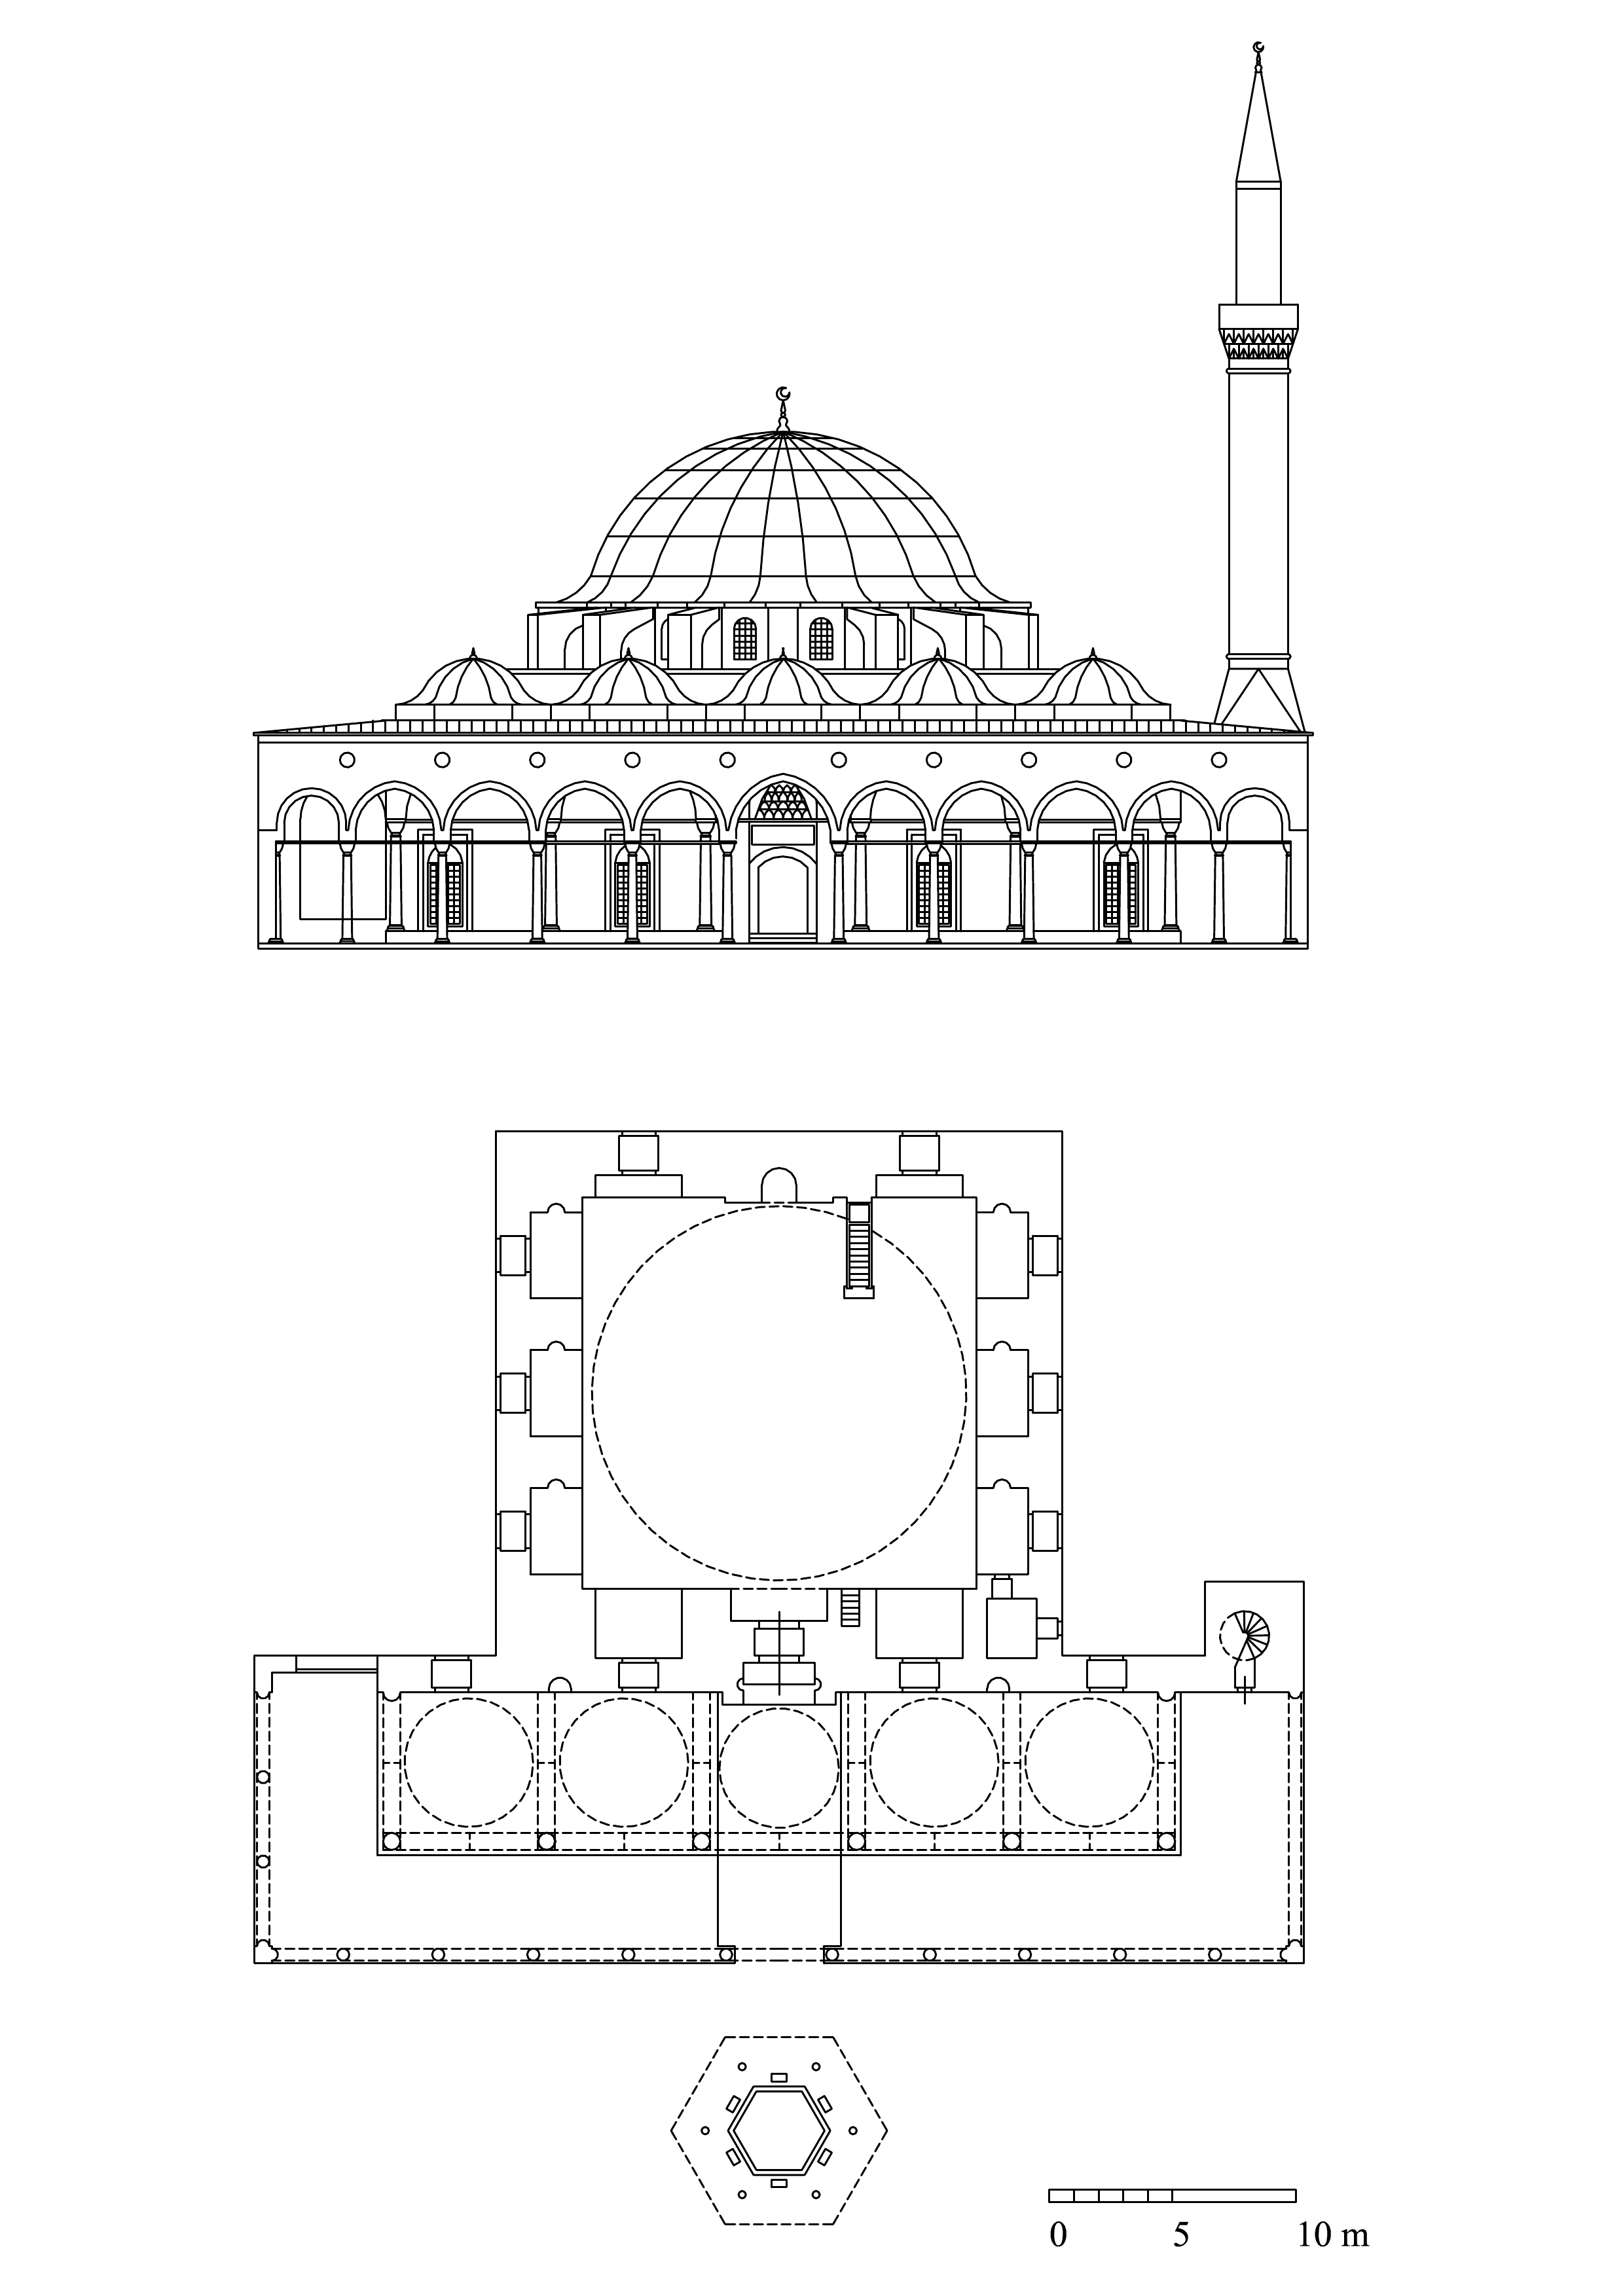 Floor plan and elevation of Adiliyya Mosque